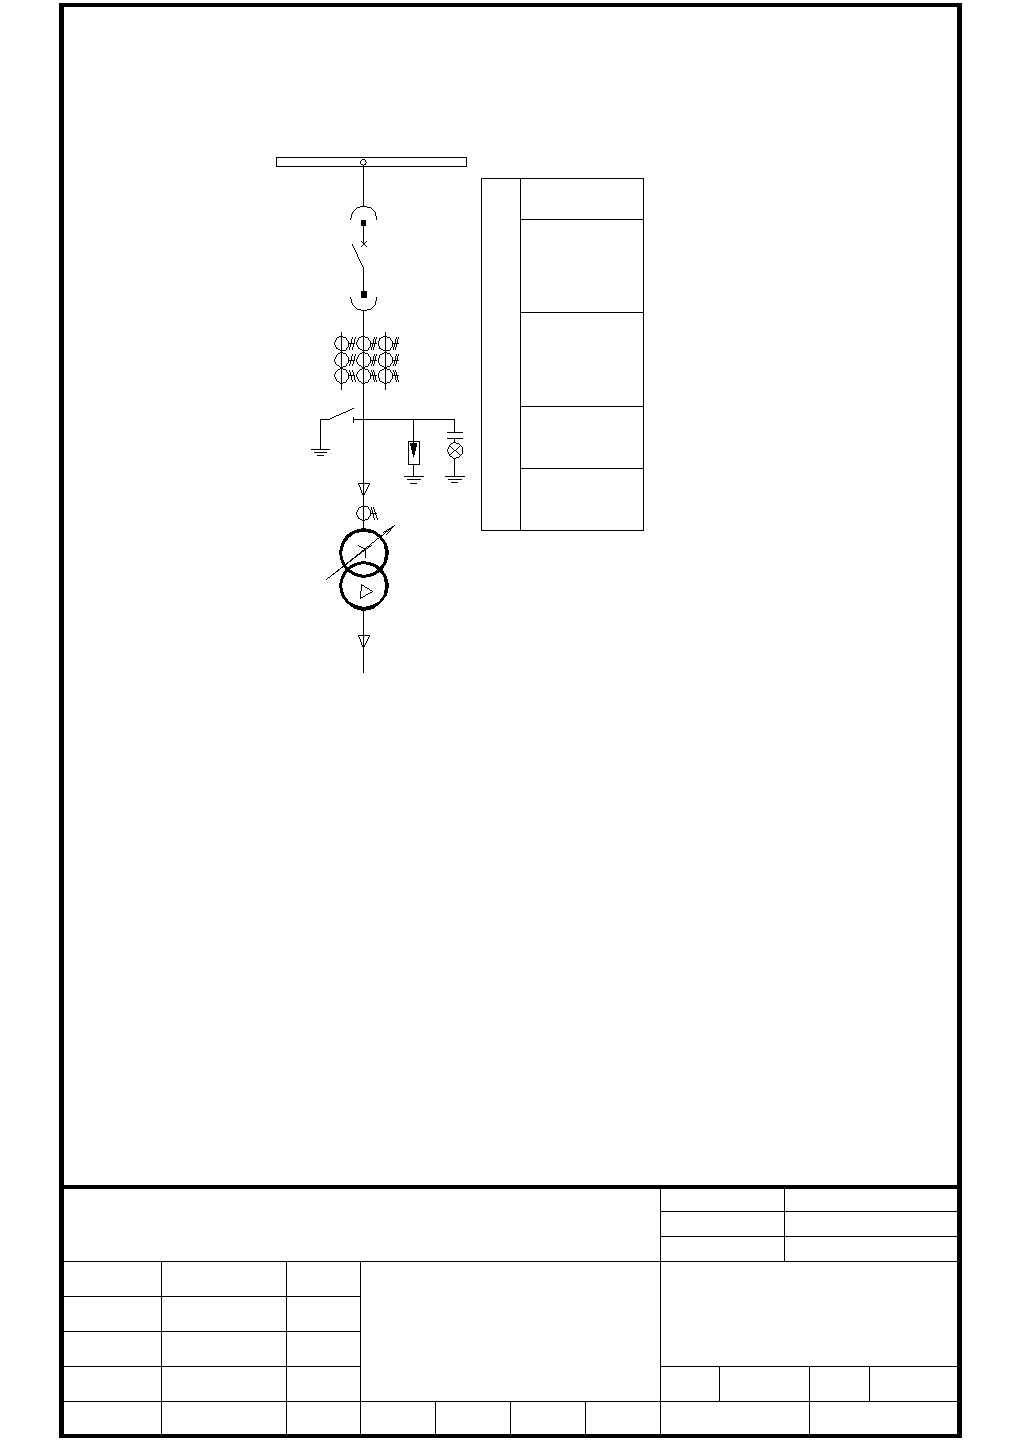 变压器室CAD电气安装图